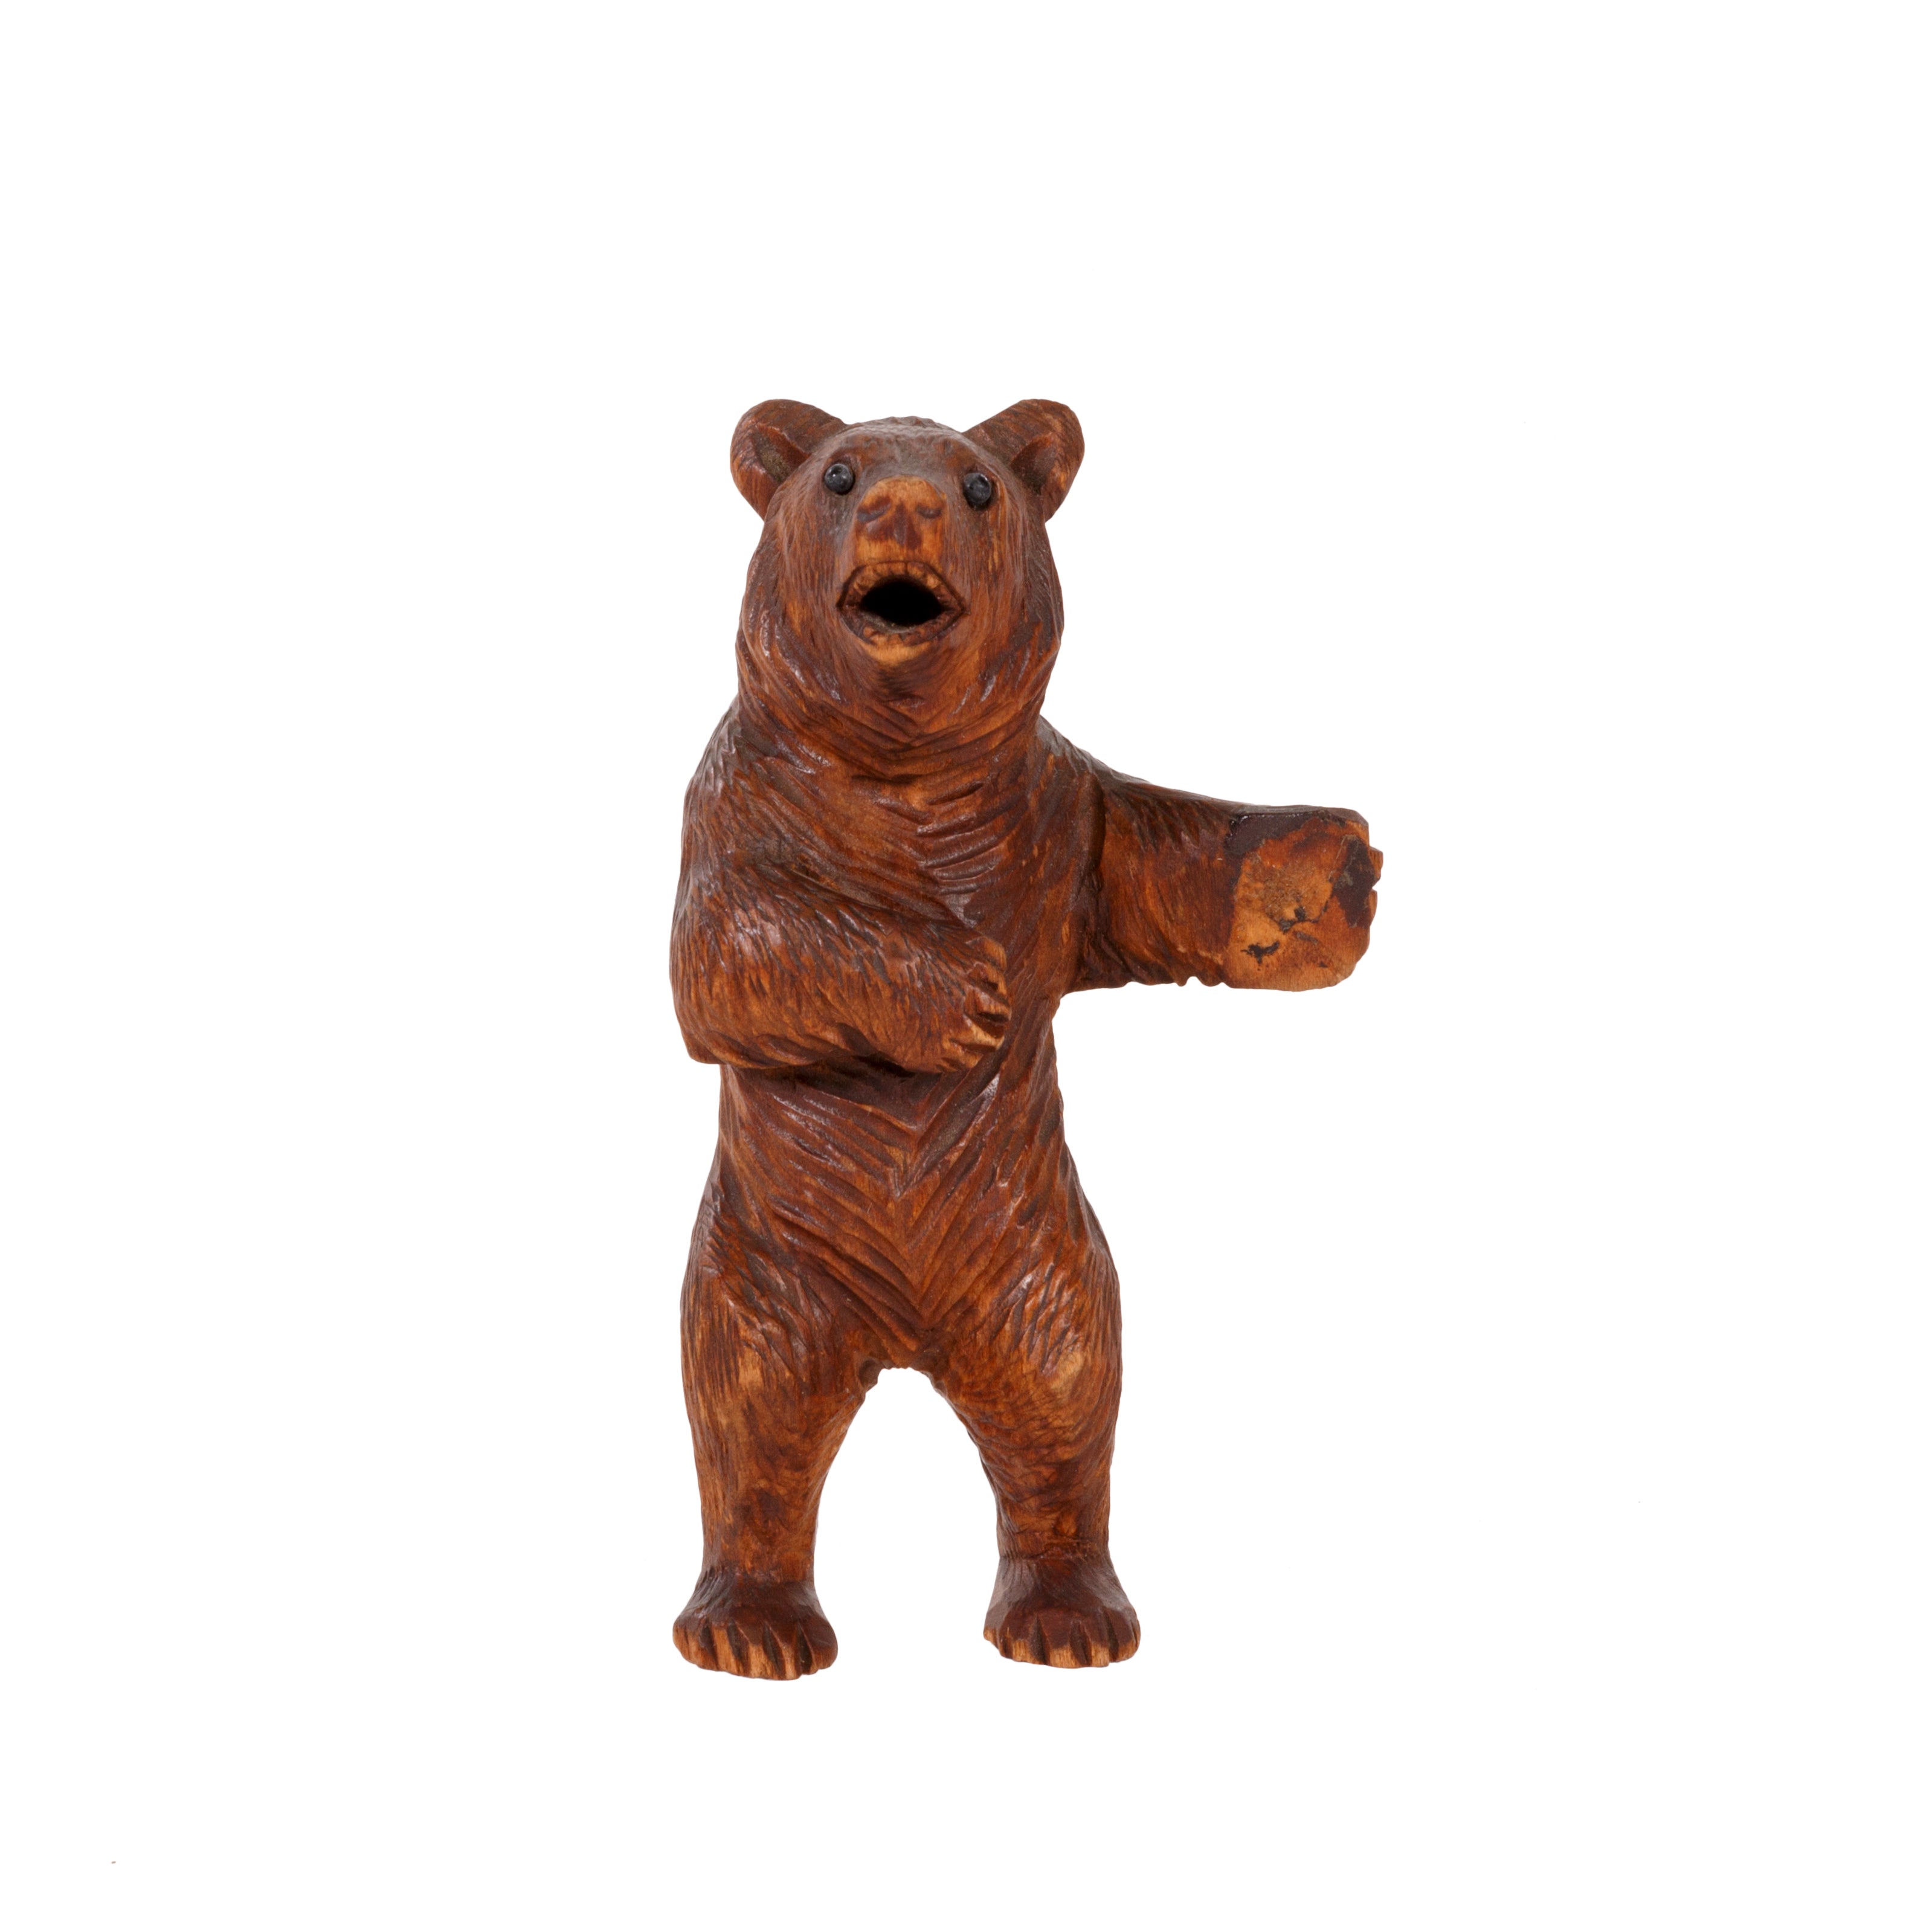 Miniature Standing Bear, Furnishings, Black Forest, Figure